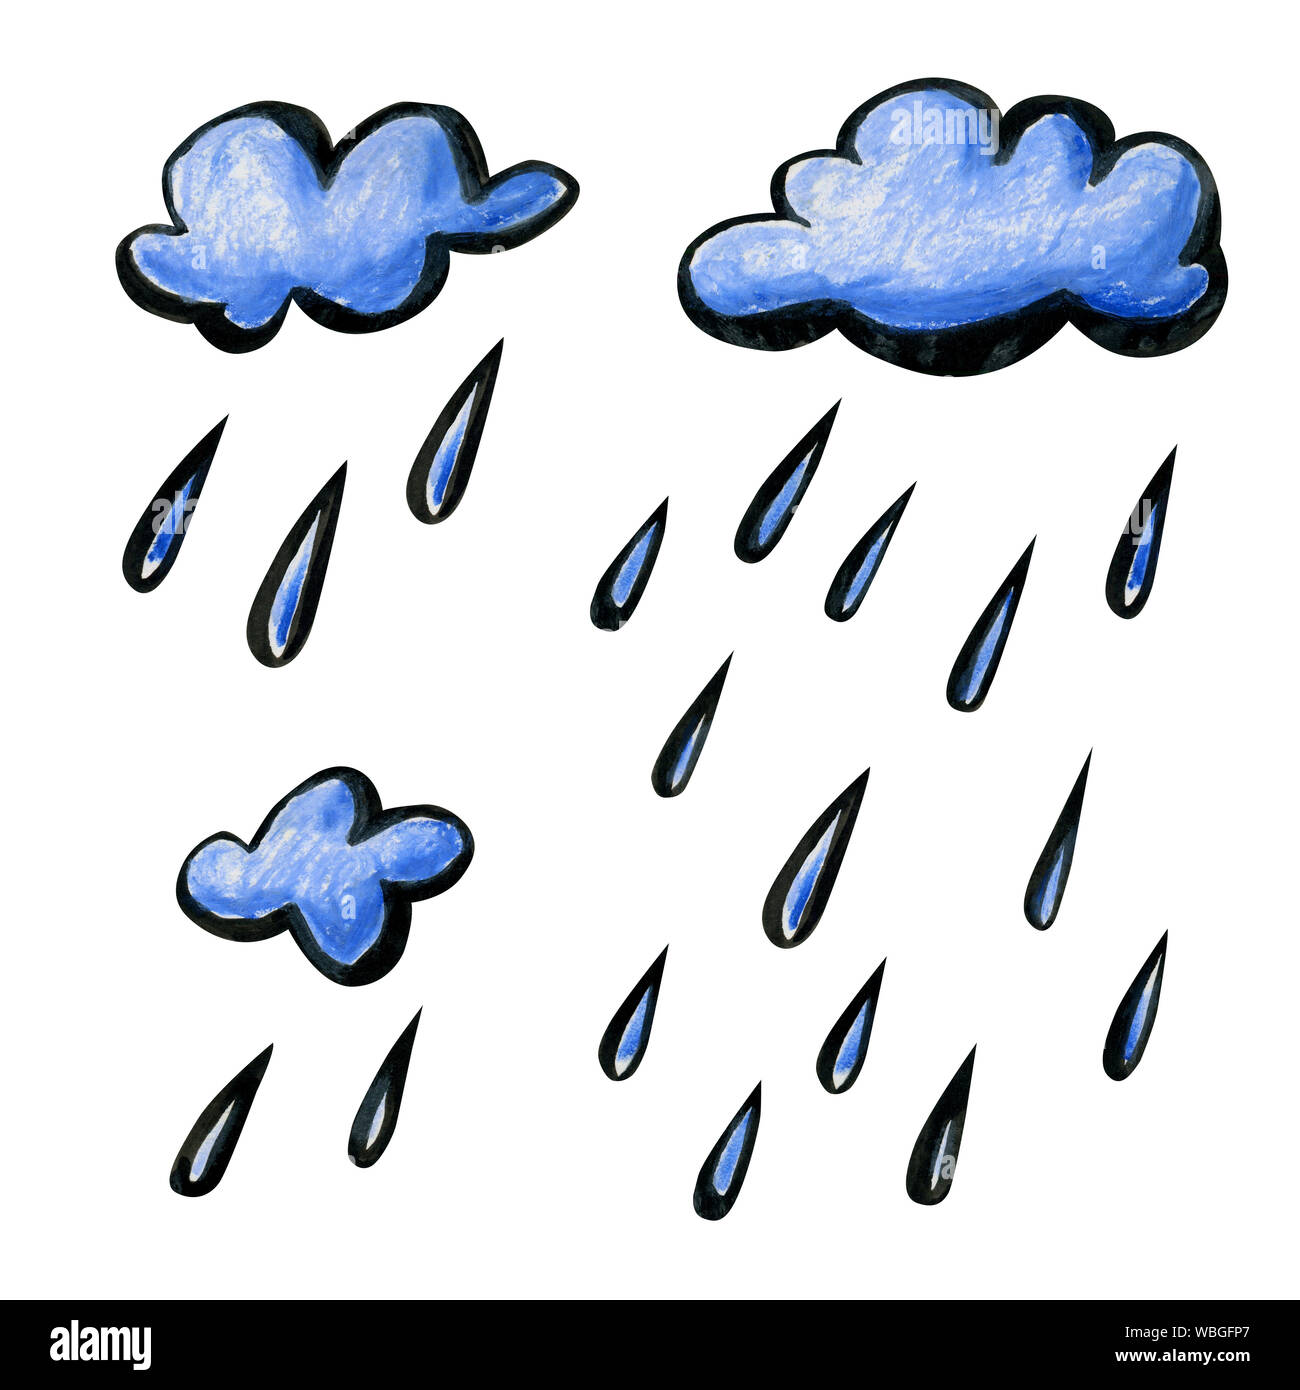 Dibujos animados de lluvia fotografías e imágenes de alta resolución - Alamy